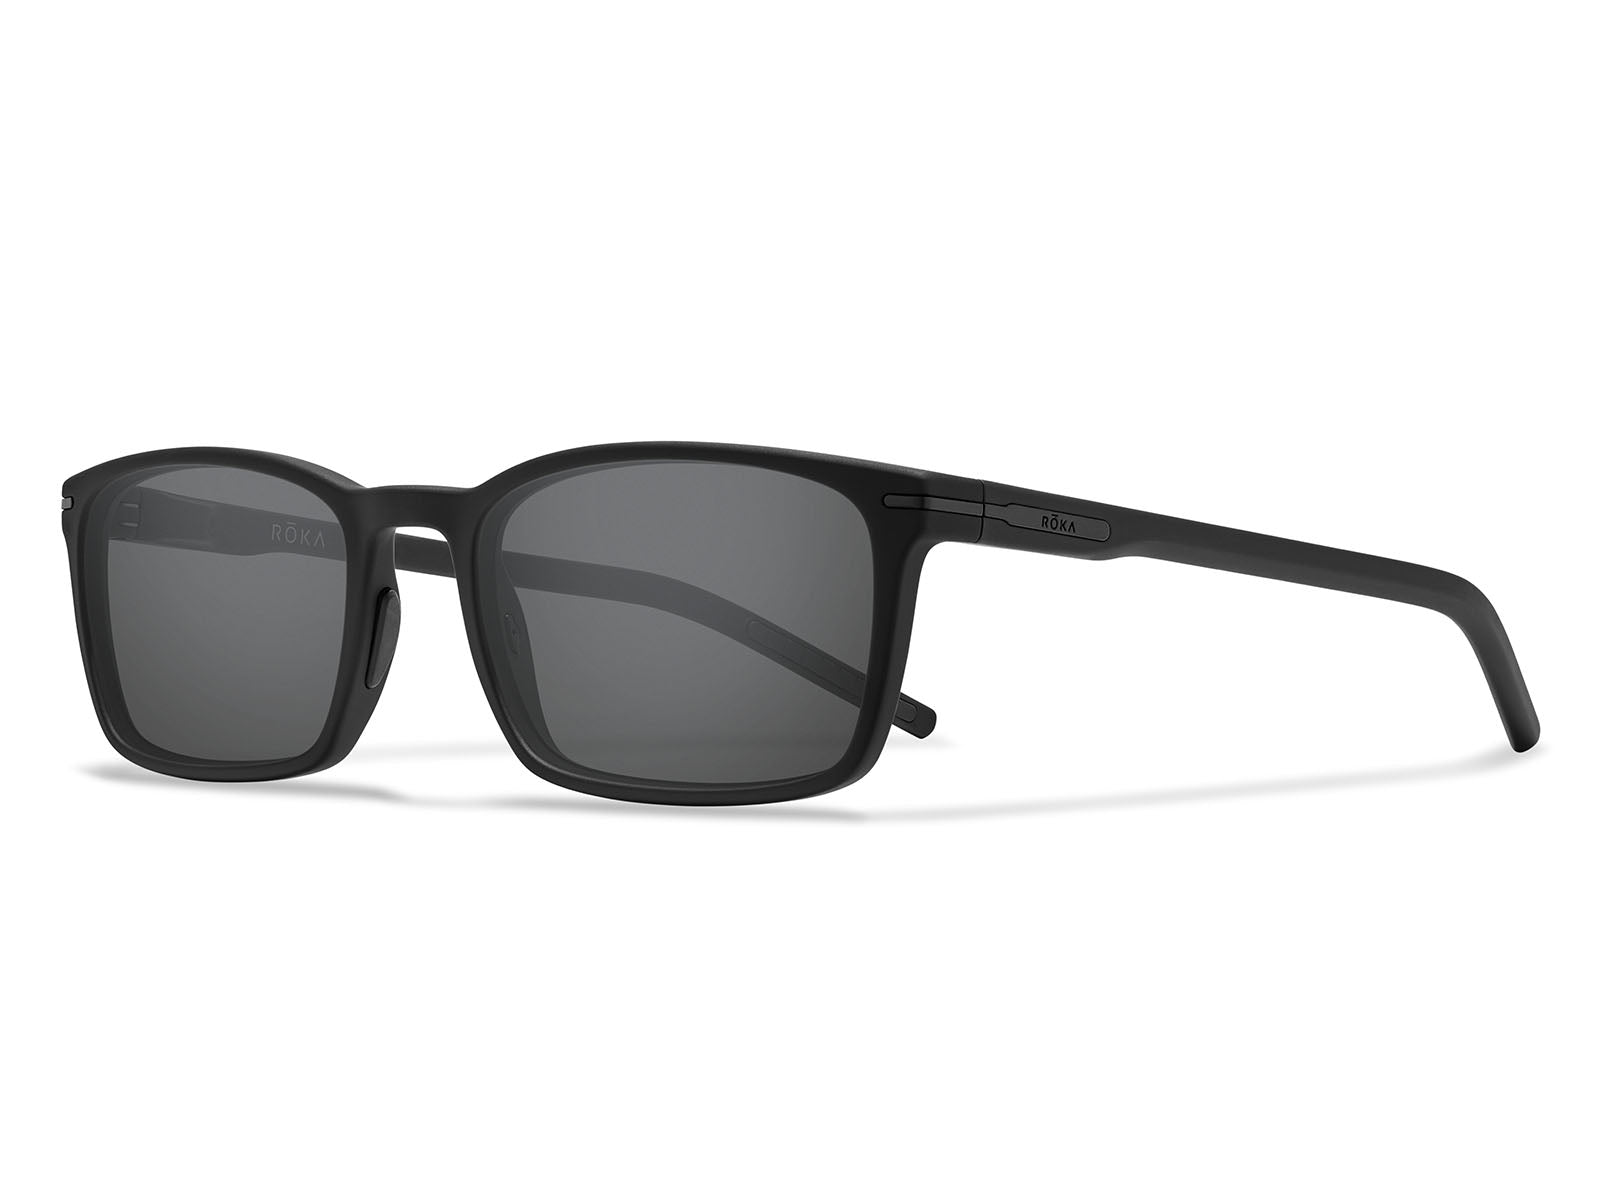 Palmer Sunglasses, Lightweight Slim Rectangular Sunglasses